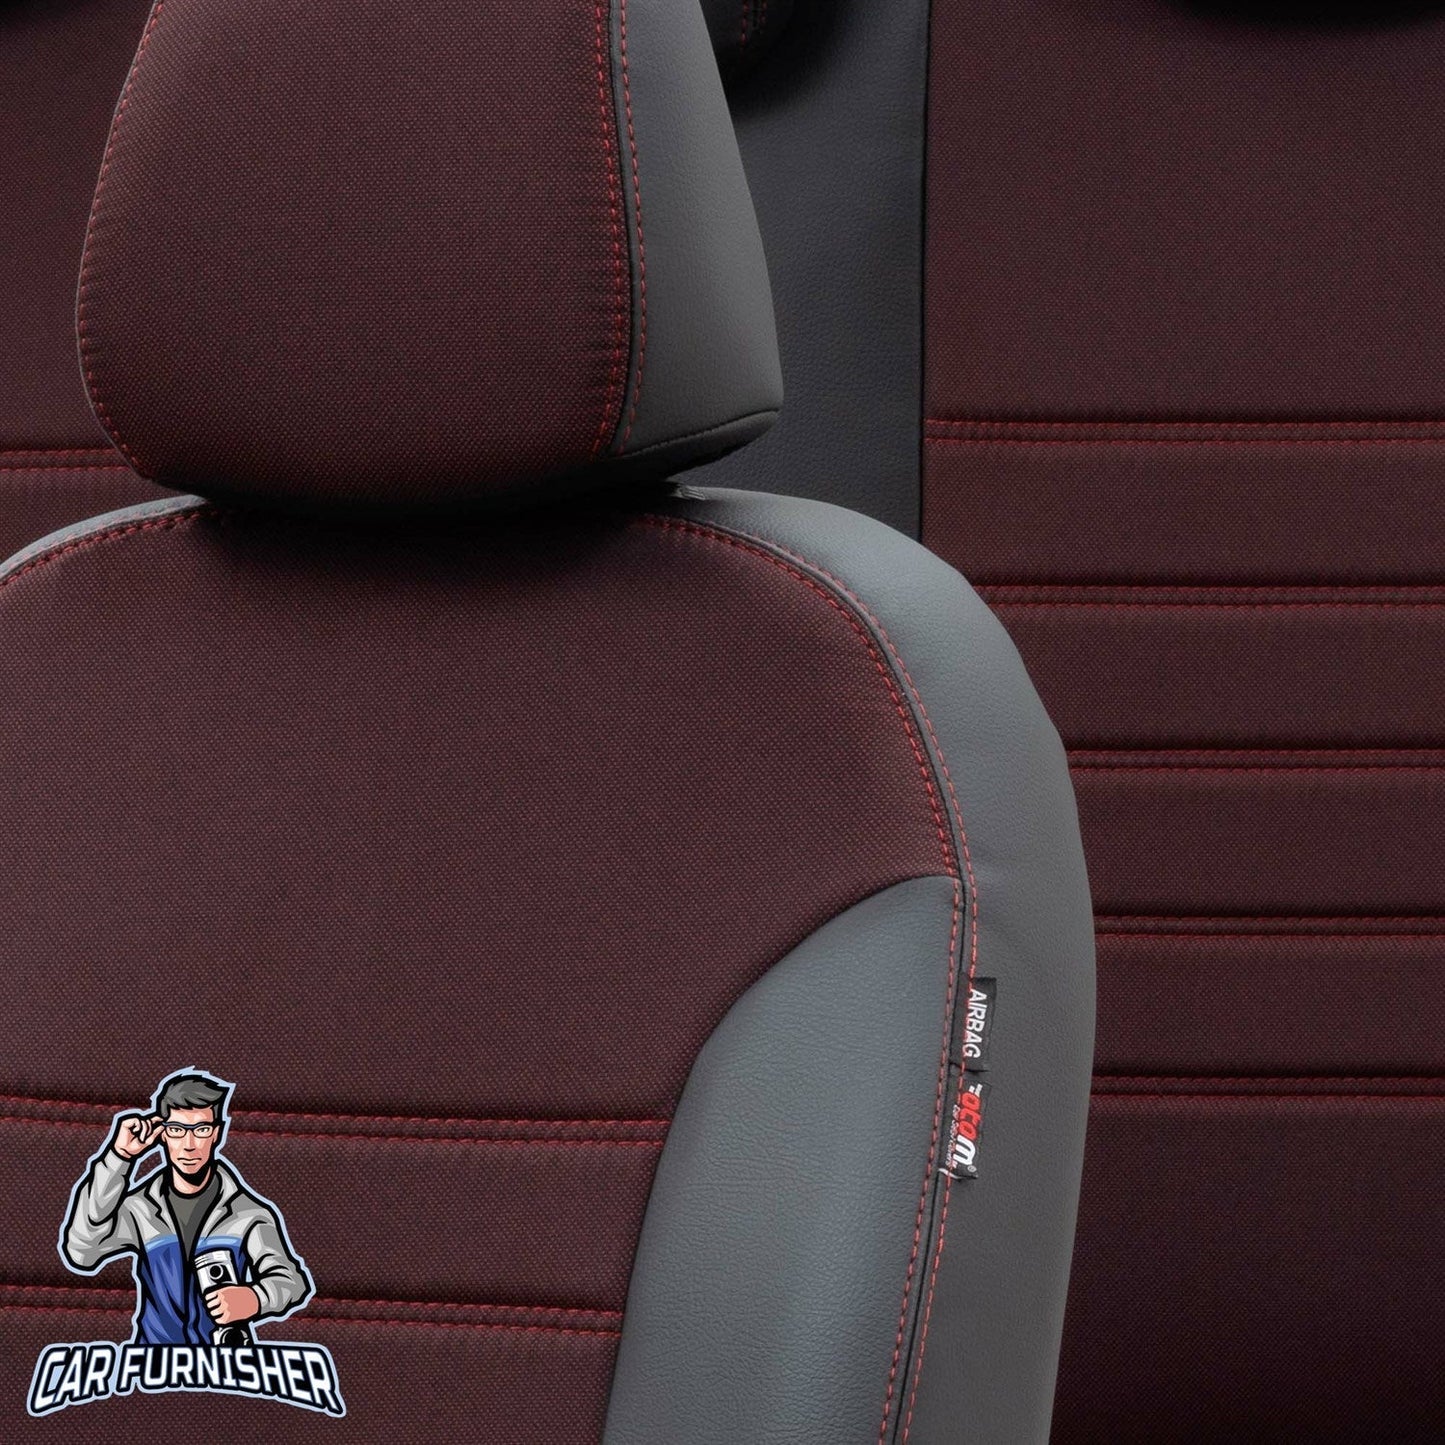 Chery Tiggo Seat Covers Paris Leather & Jacquard Design Red Leather & Jacquard Fabric